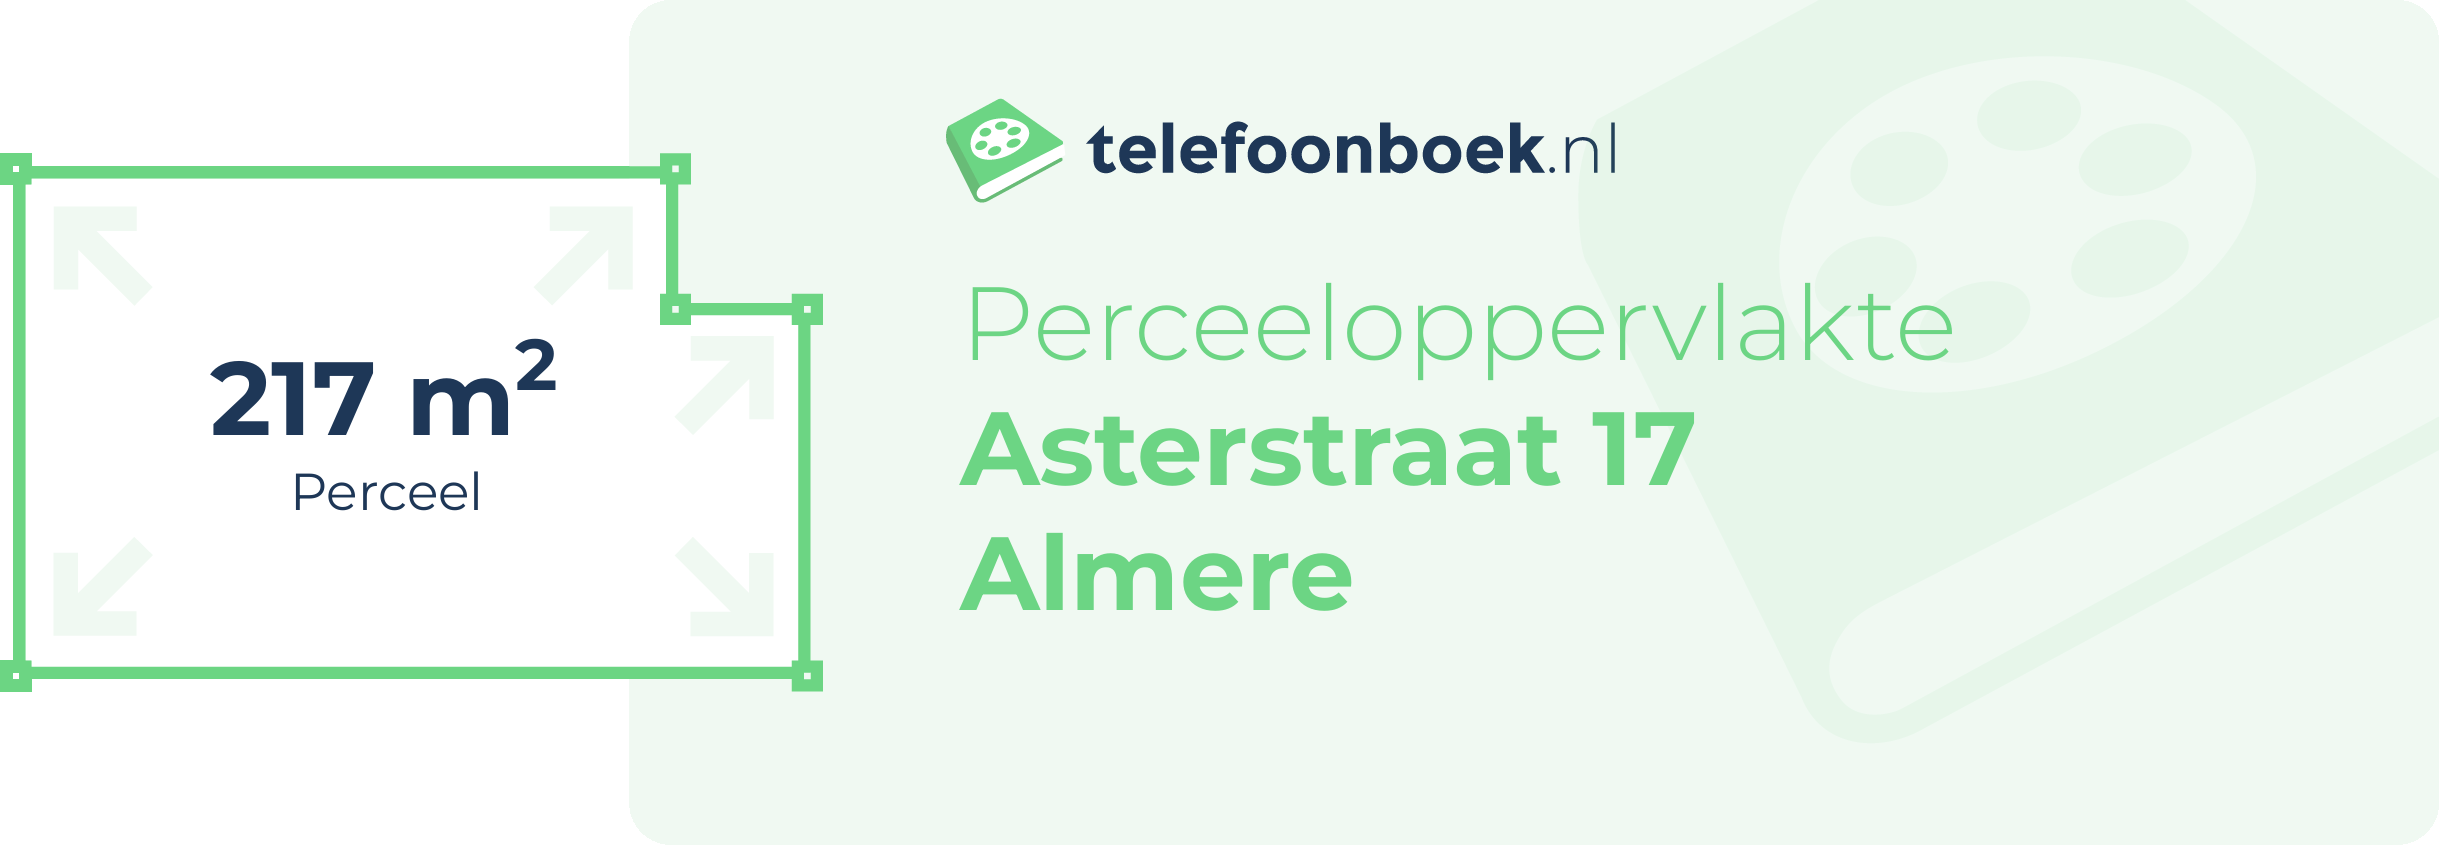 Perceeloppervlakte Asterstraat 17 Almere